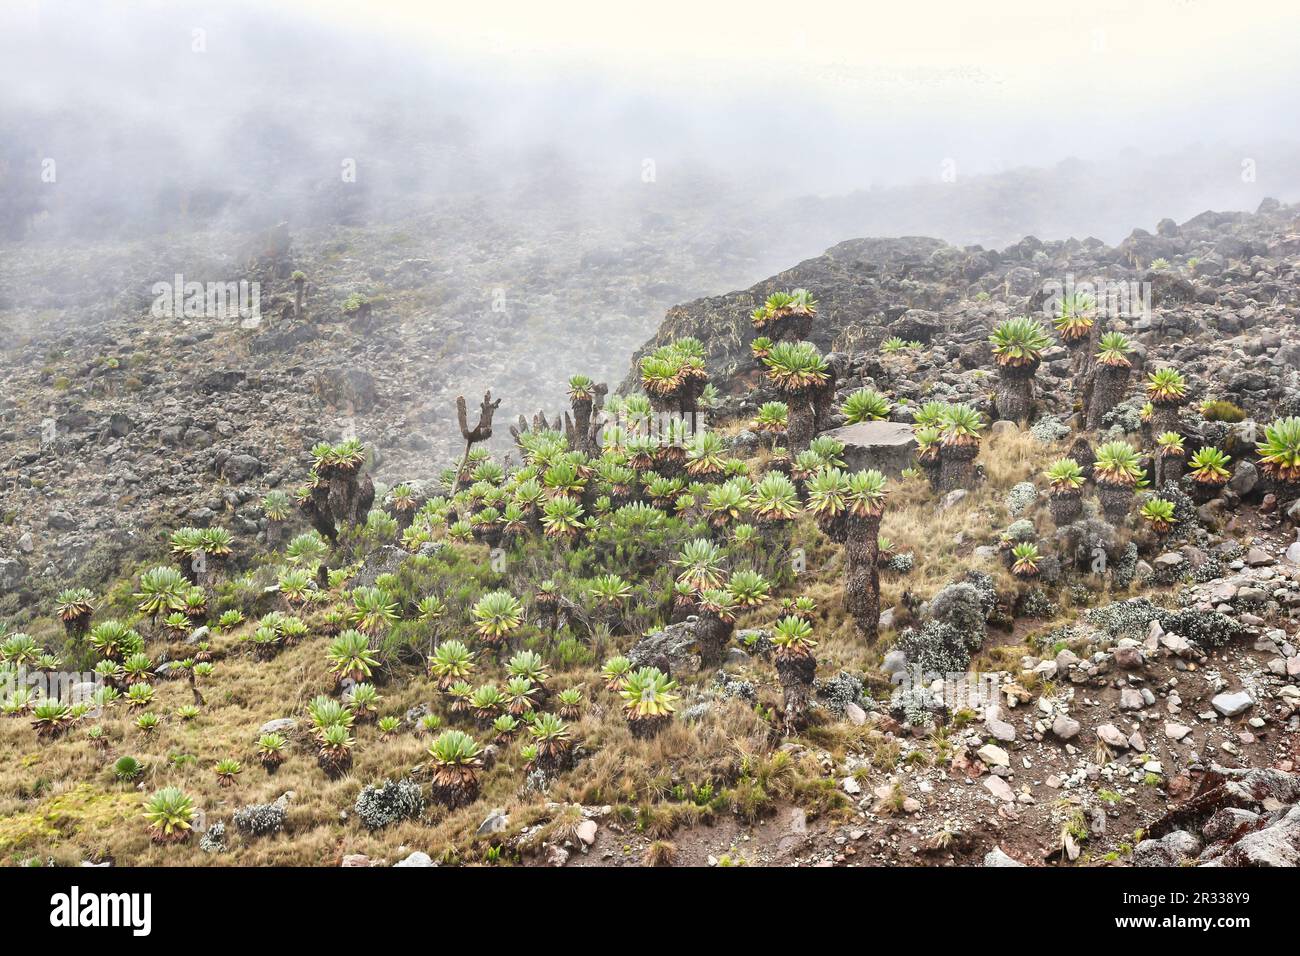 Giant Groundsels growing in the moorland region of Kilimanjaro pictured near Barranco Camp at 3700 m above sea level, botanical name Dendrosenecio kilimanjari, Tanzania Stock Photo